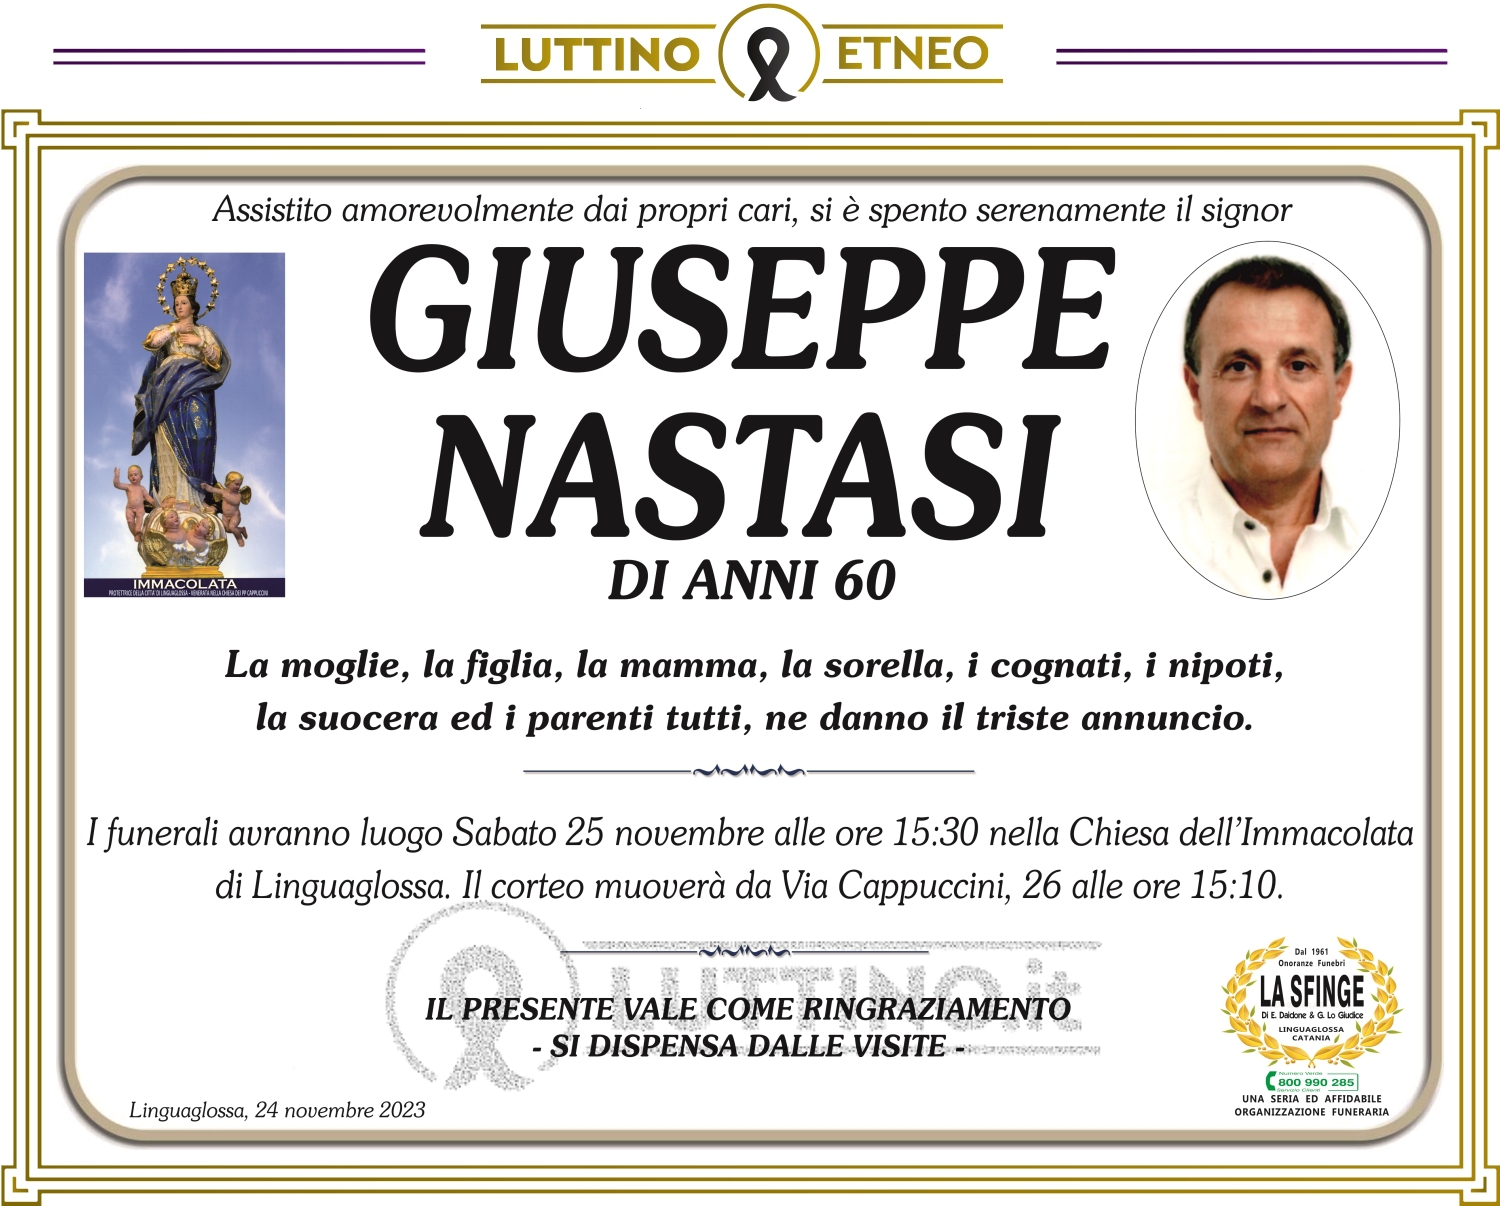 Giuseppe Nastasi